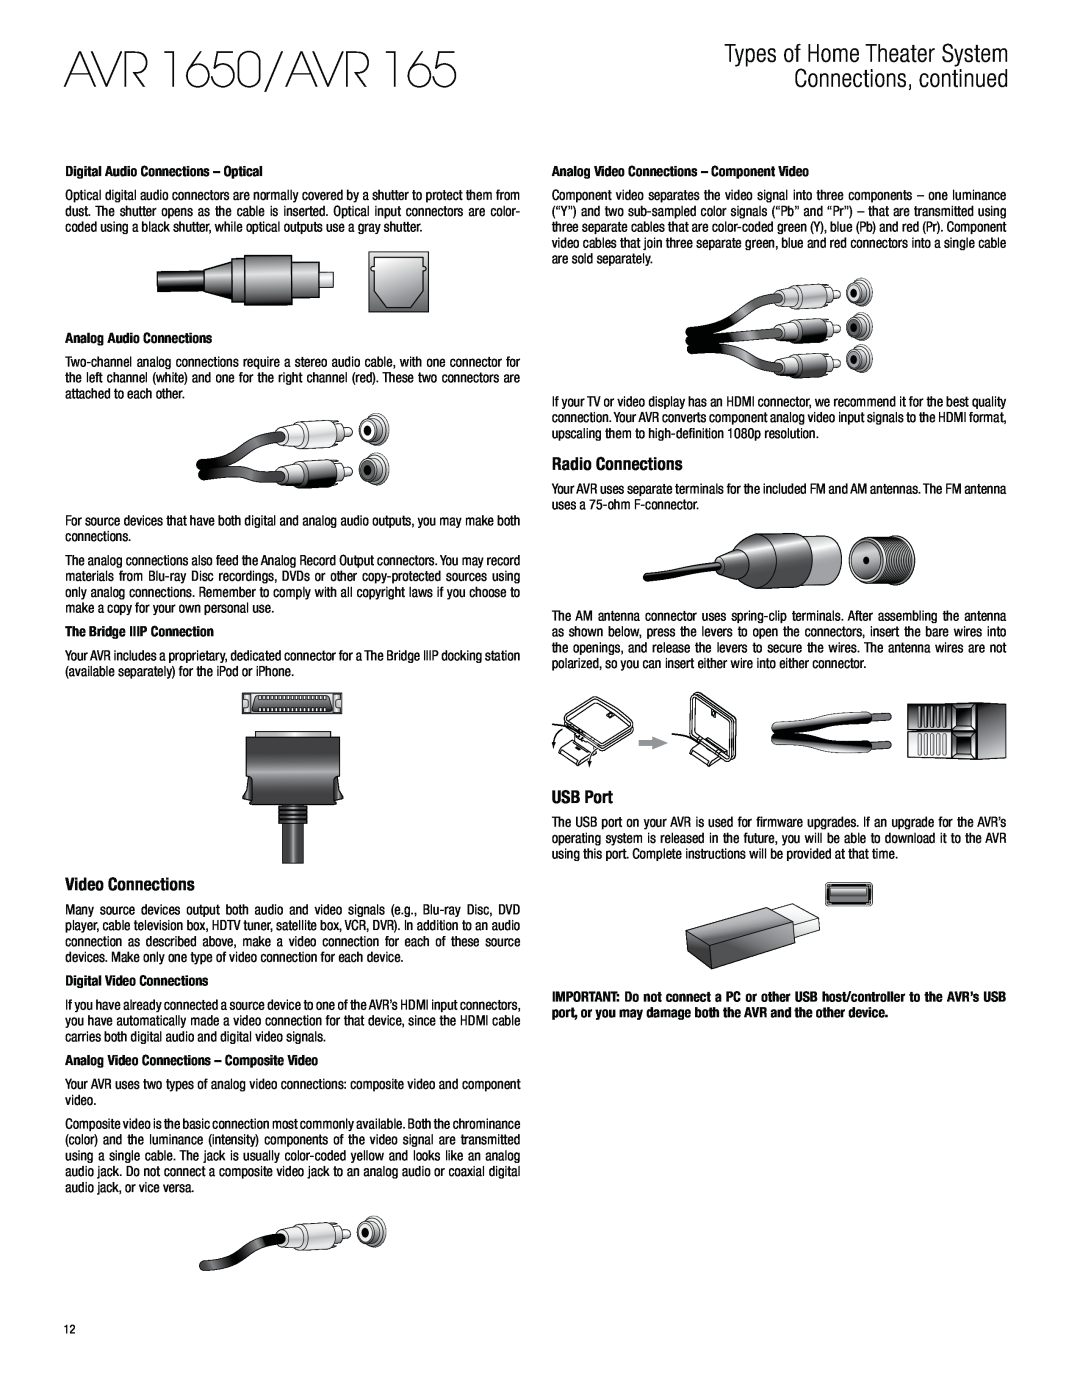 Harman-Kardon Radio Connections, Video Connections, USB Port, AVR 1650/AVR, Digital Audio Connections – Optical 